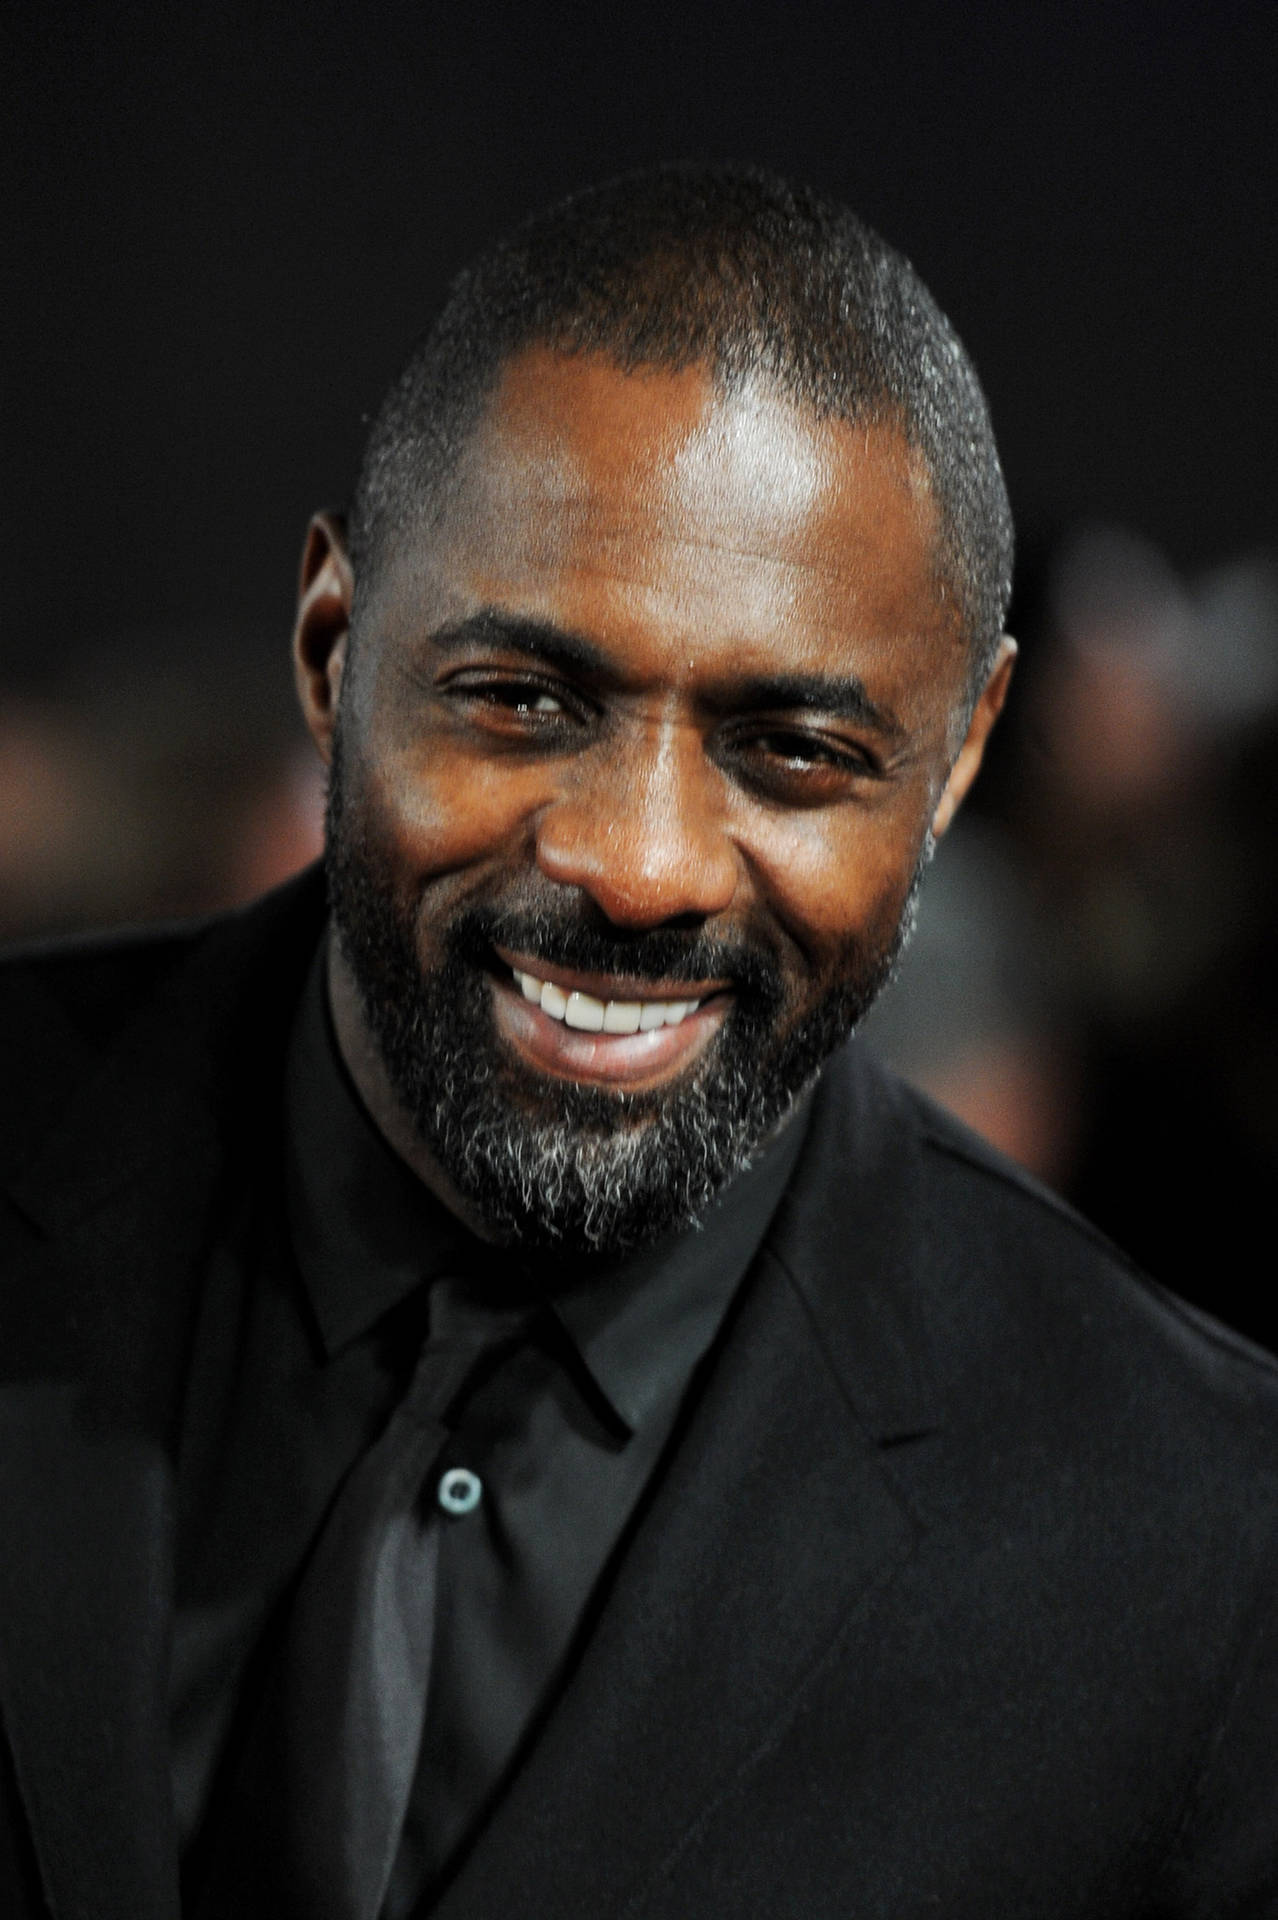 Idris Elba Against Blurry Dark Backdrop